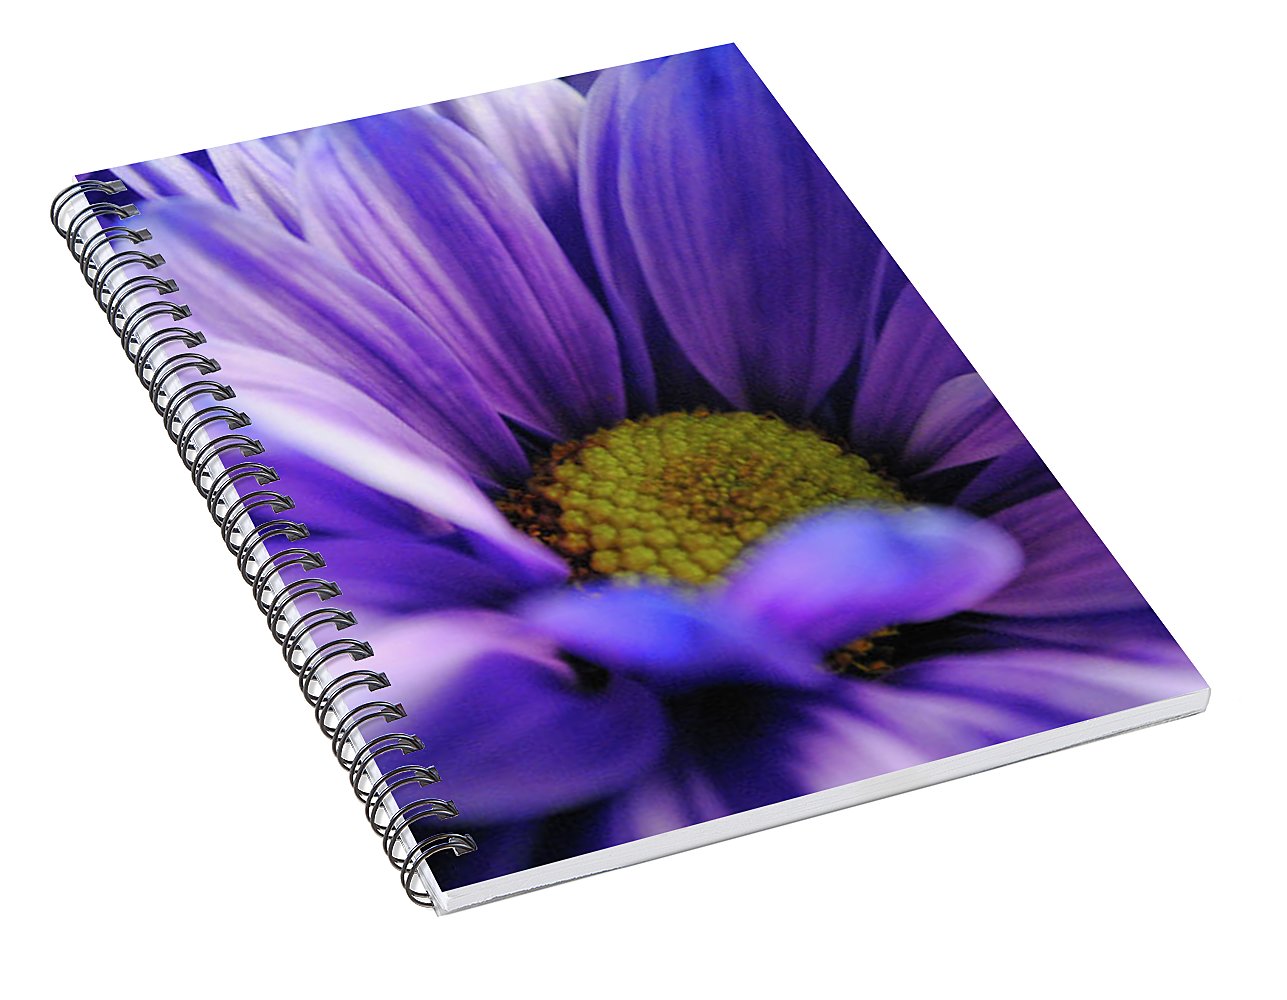 Raw Flowers 10 - Spiral Notebook